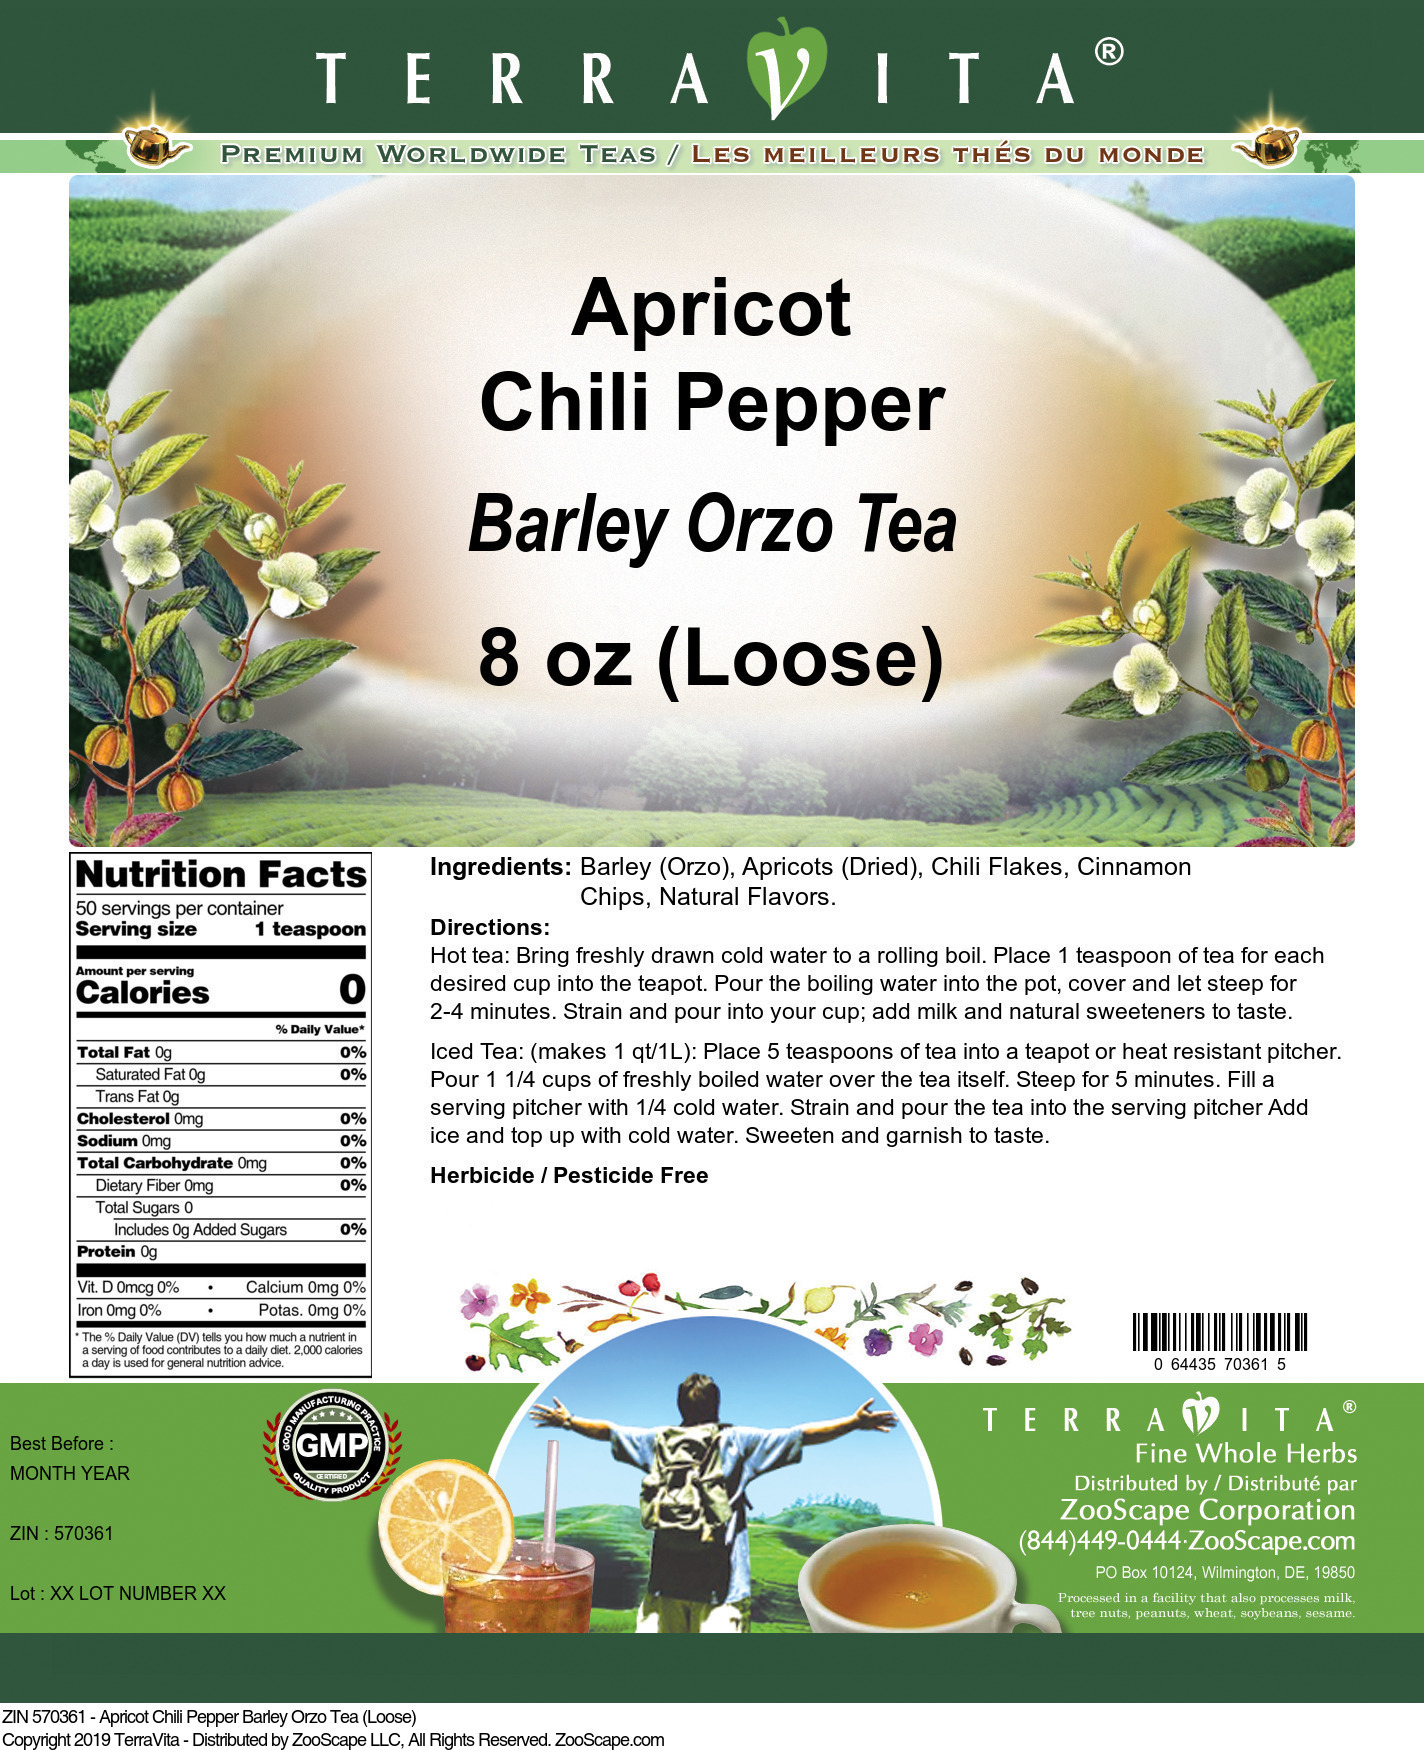 Apricot Chili Pepper Barley Orzo Tea (Loose) - Label